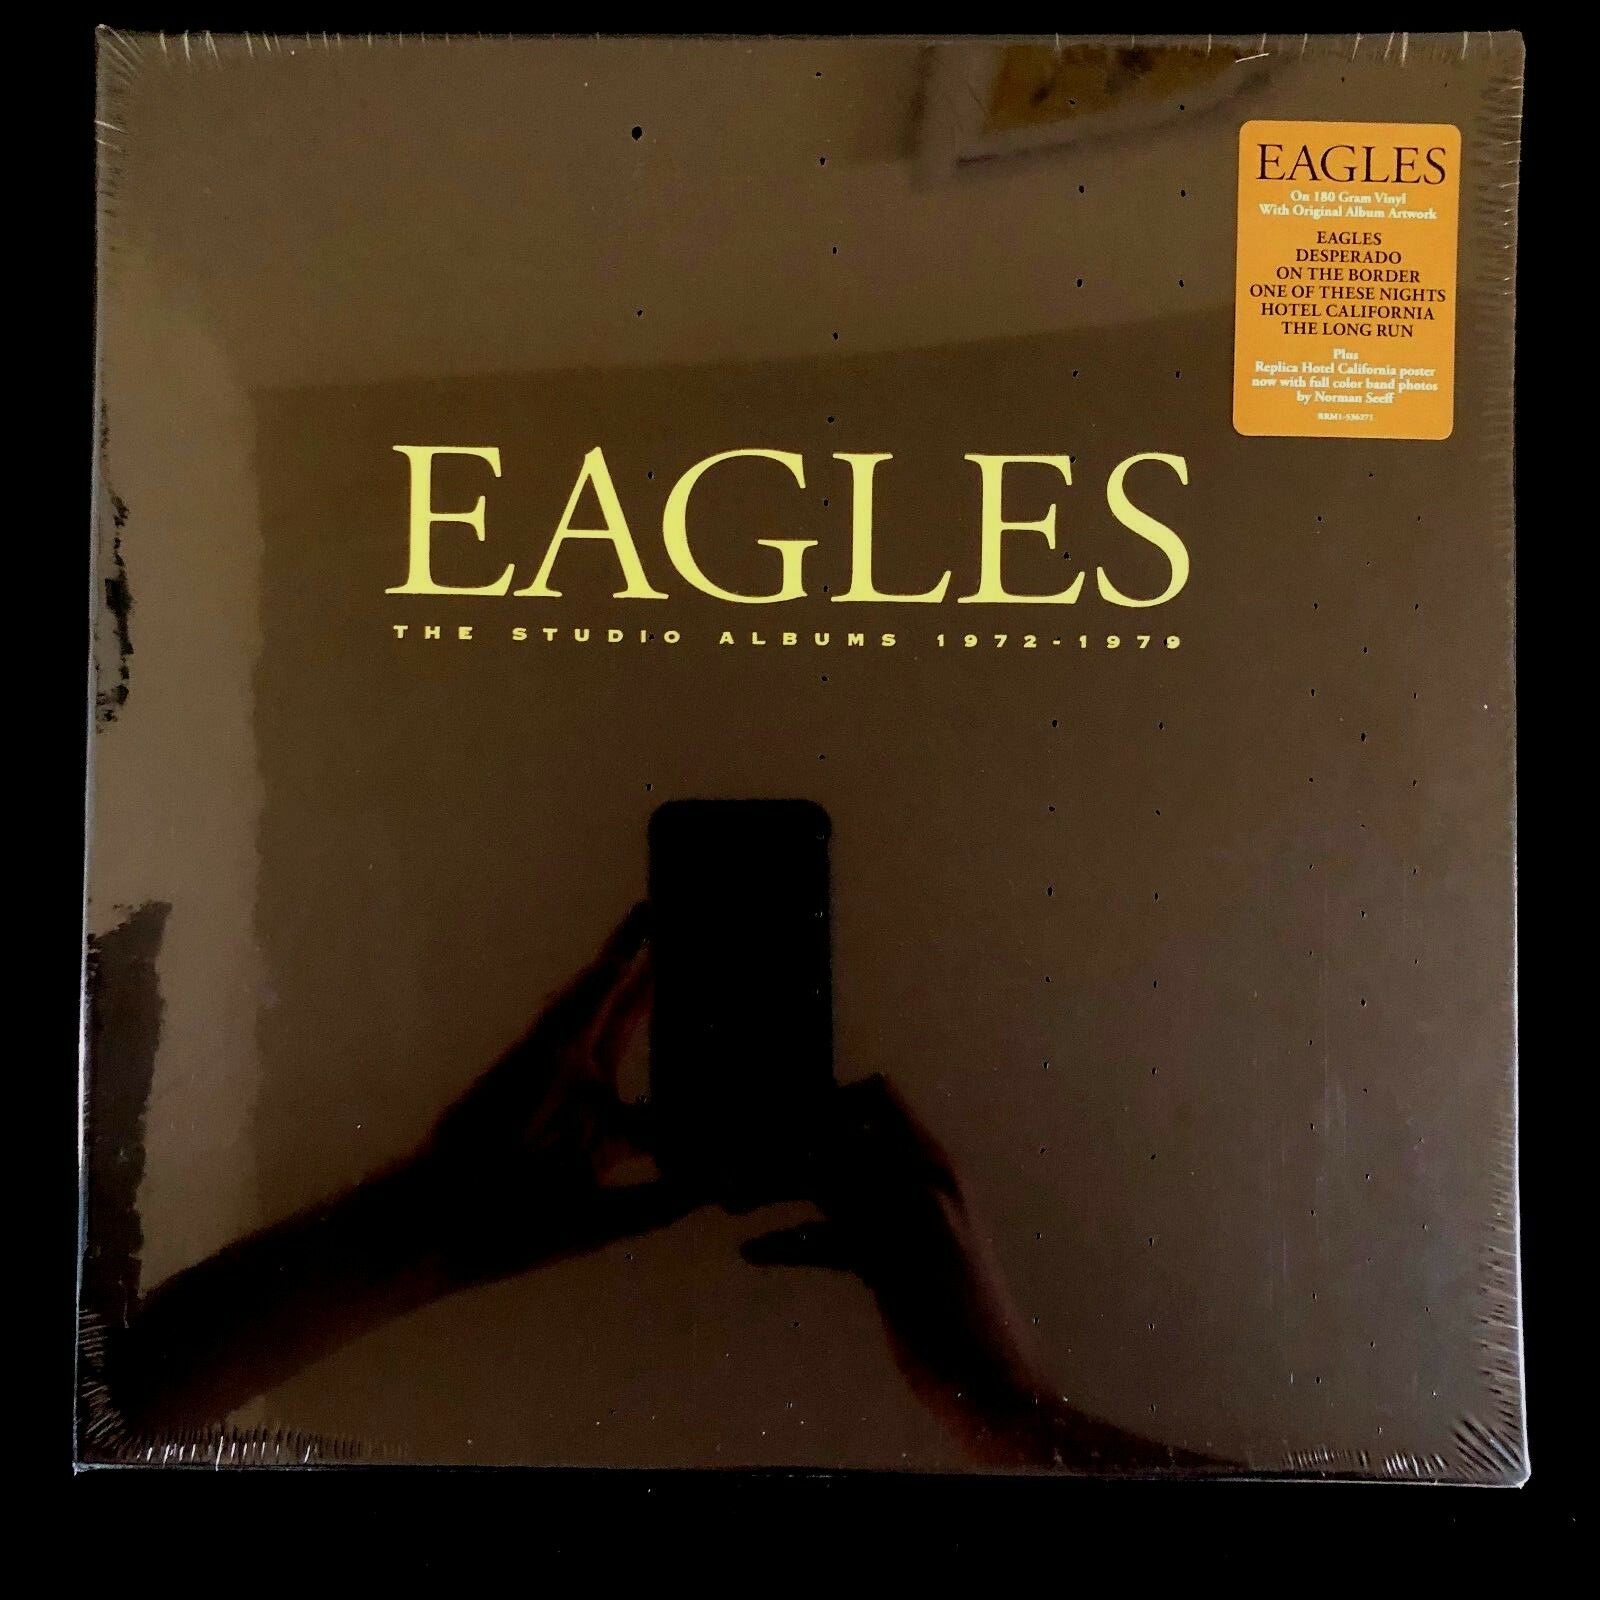 popsike.com - THE EAGLES - THE STUDIO ALBUMS 1972-79 [SEALED MINT